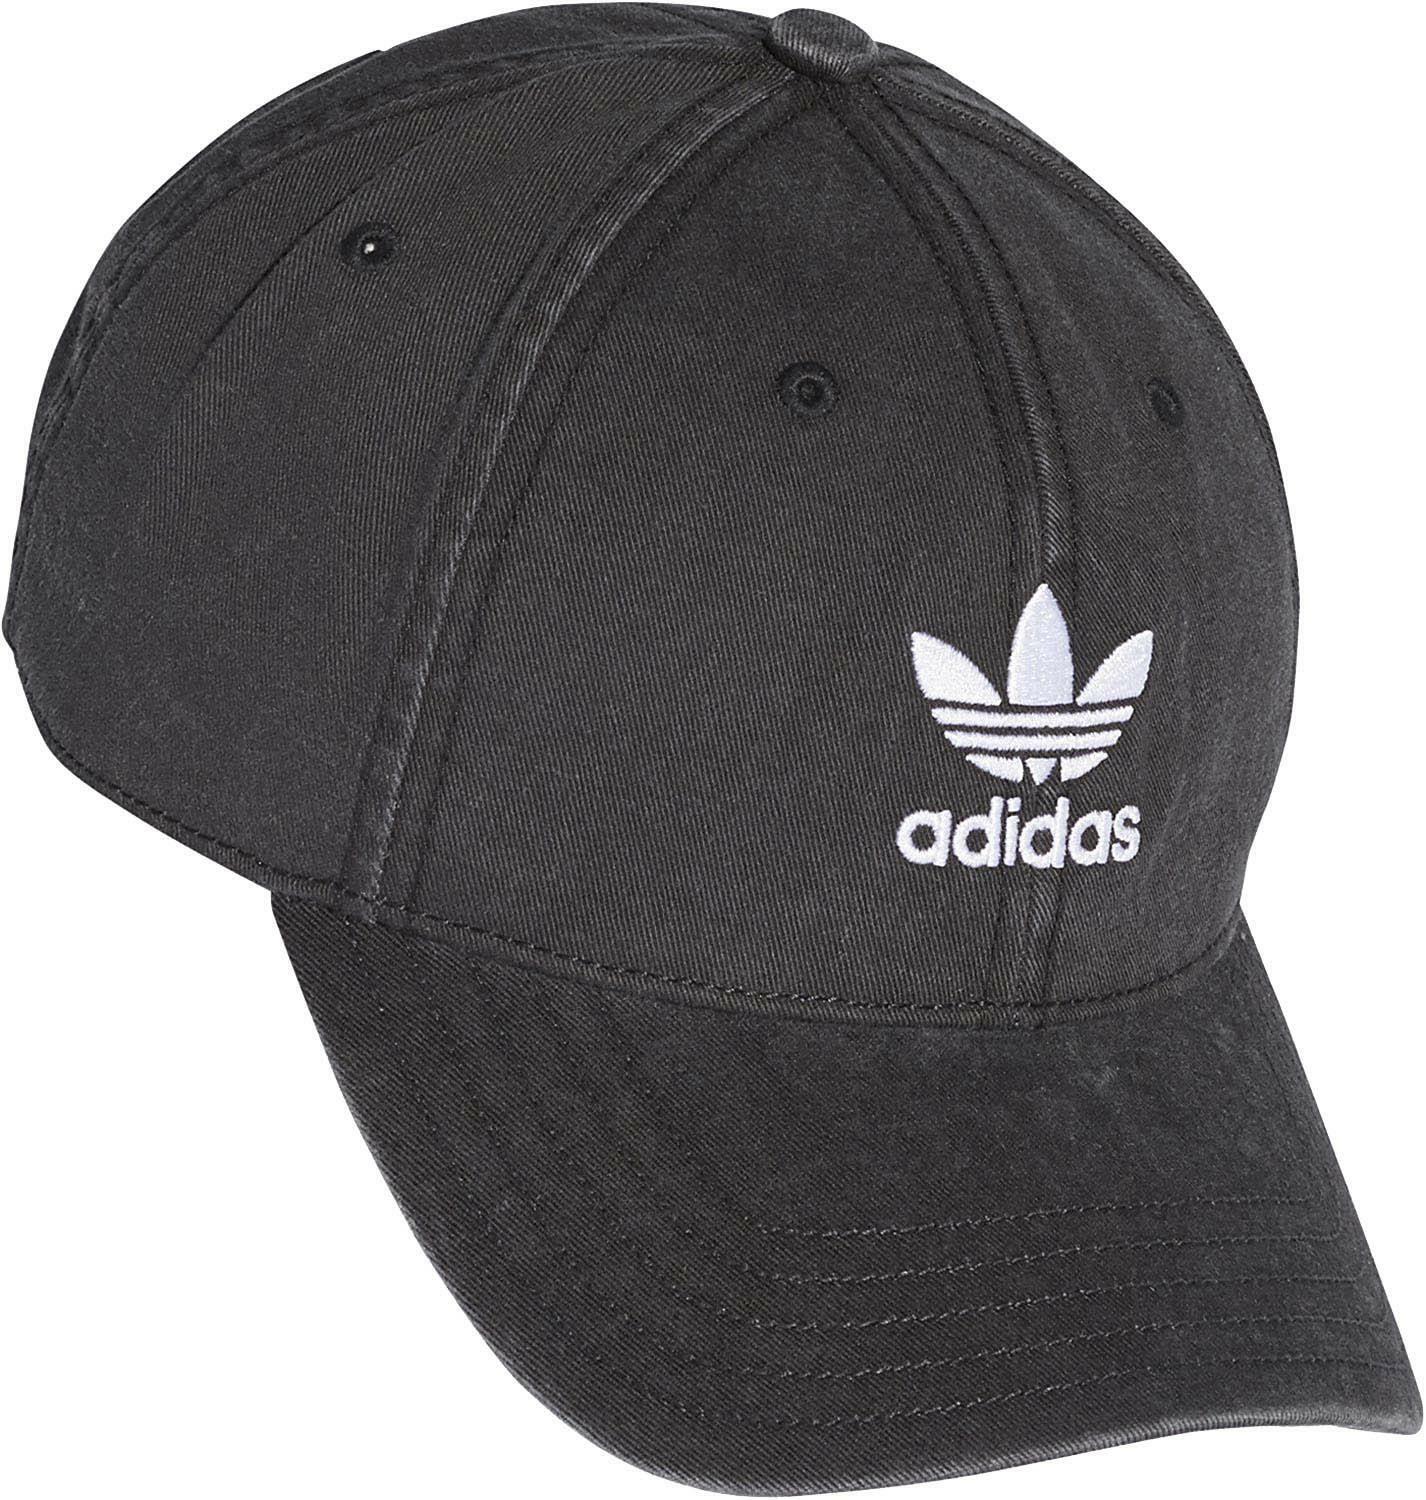 adidas cappello nero